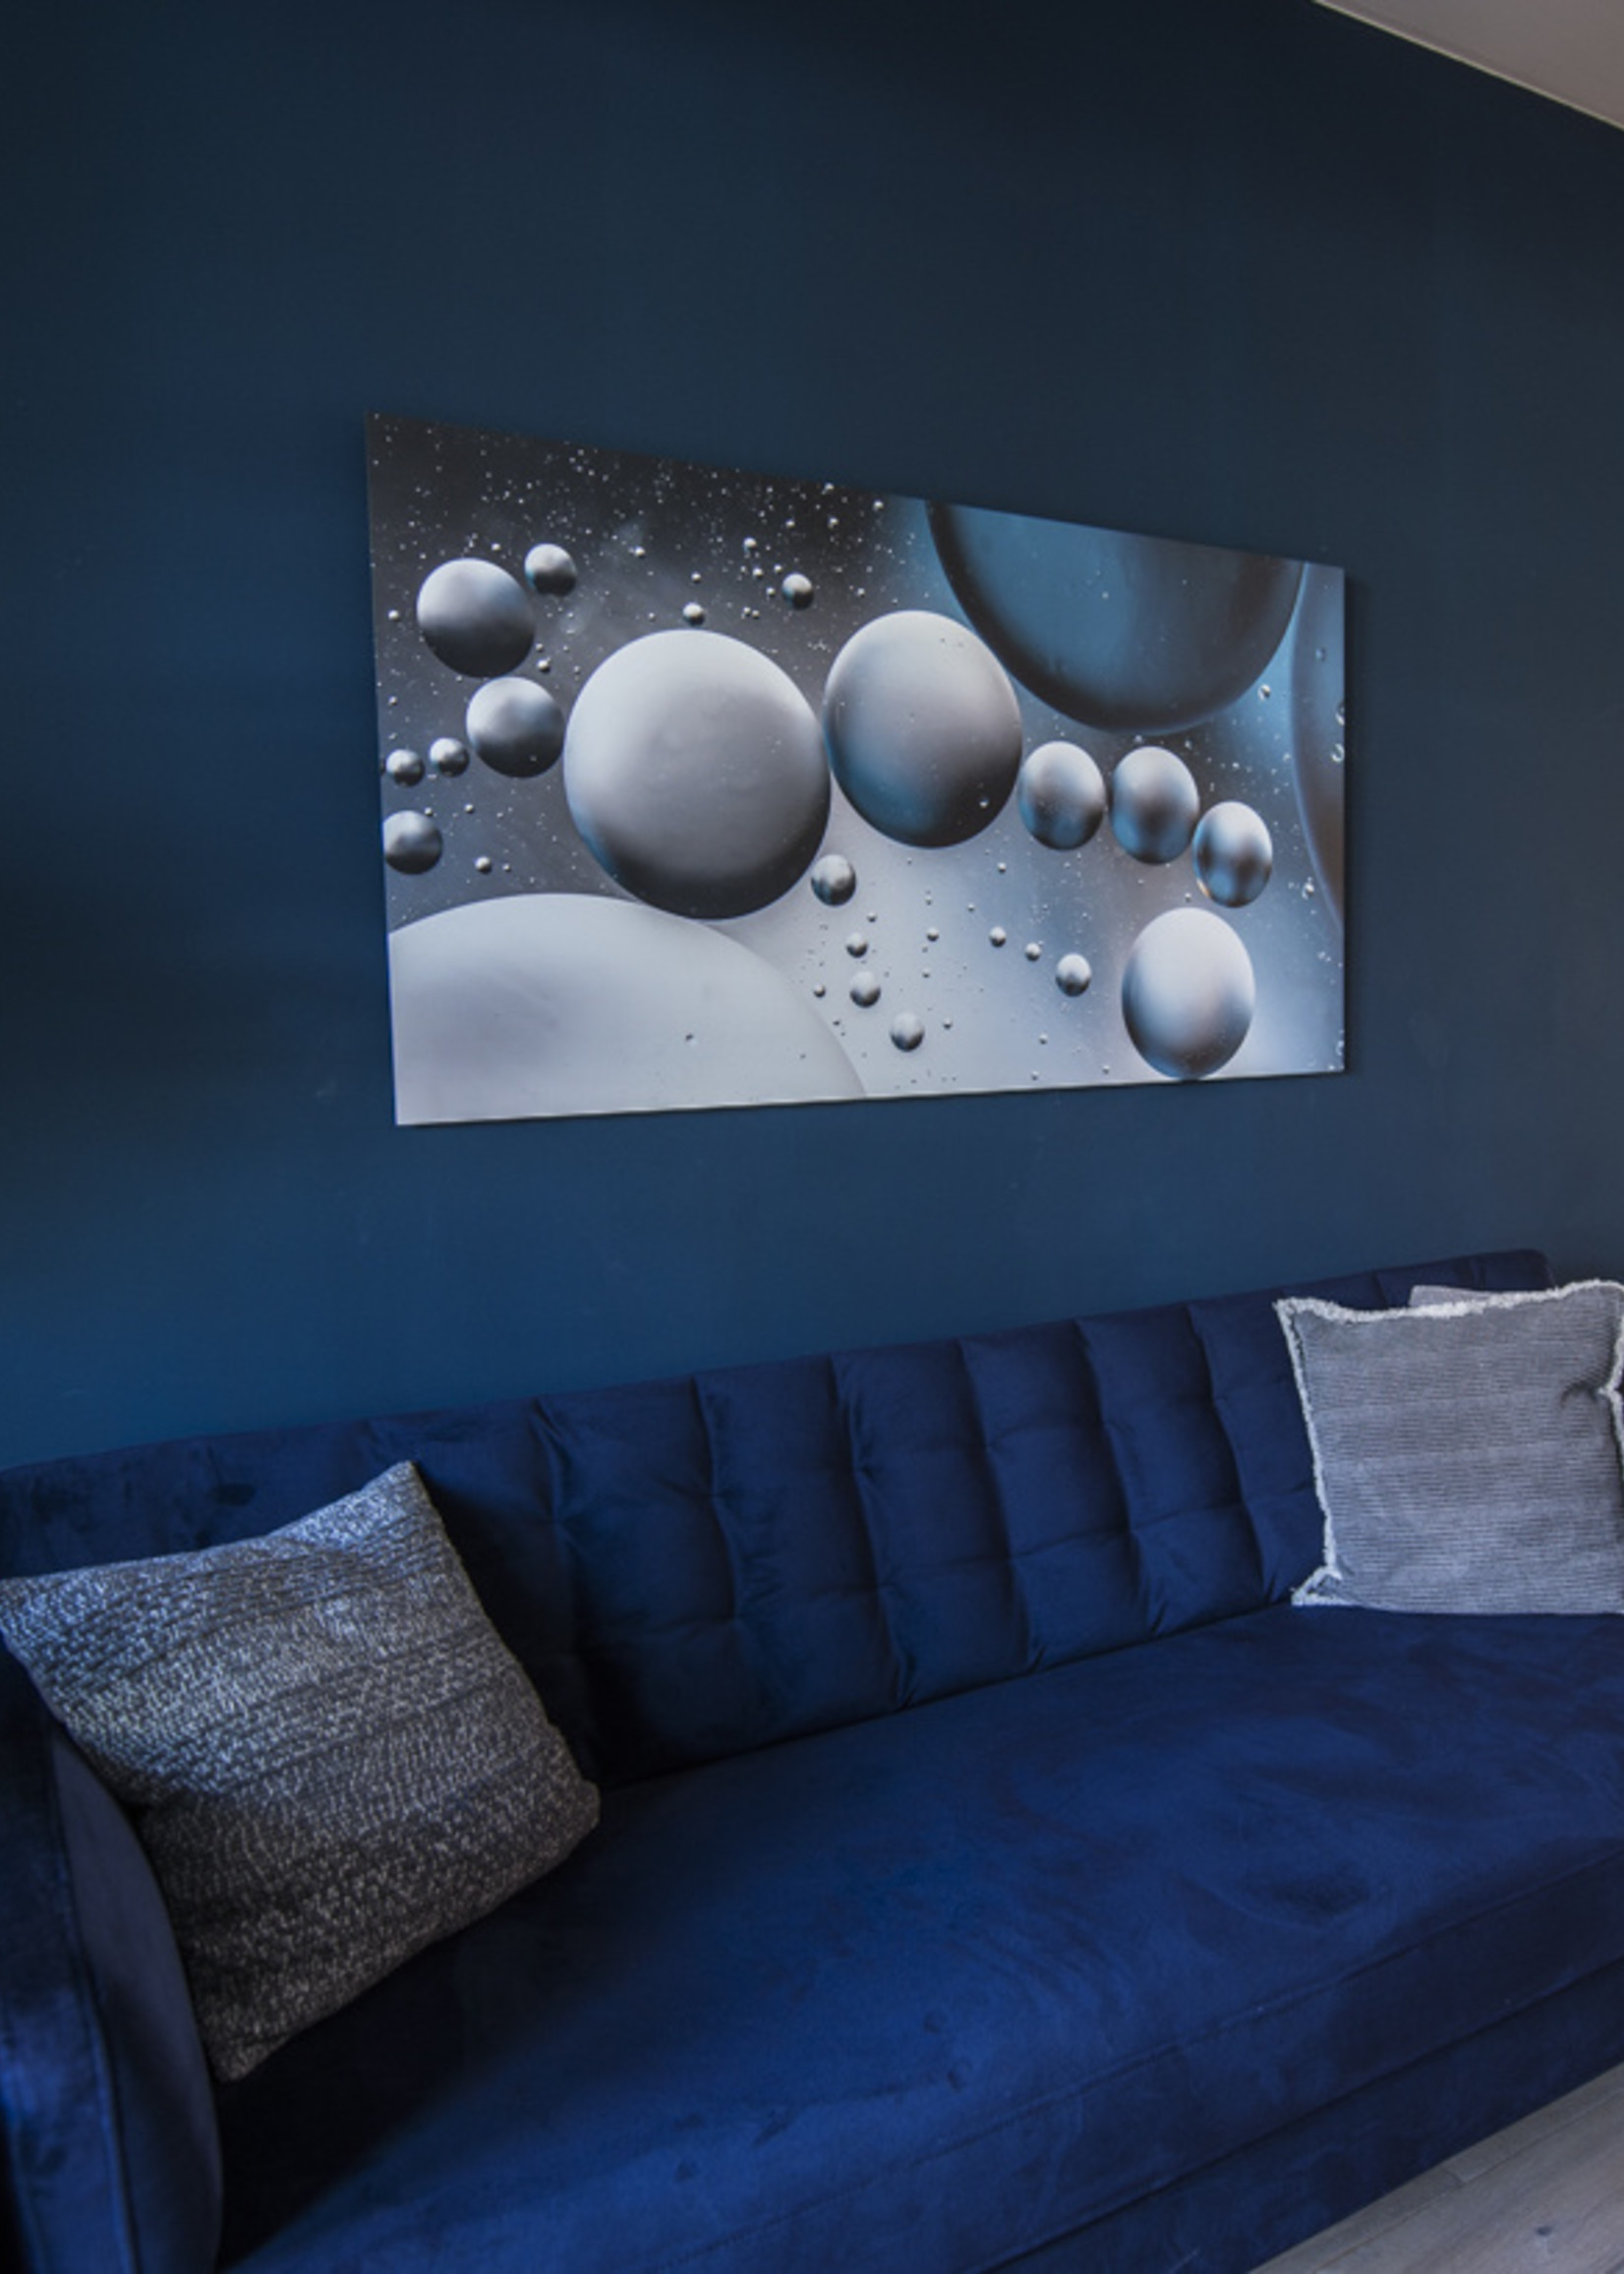 Frans van Steijn Wall photo "Bubble Art # 3" Aluminum on Dibond 120 cm